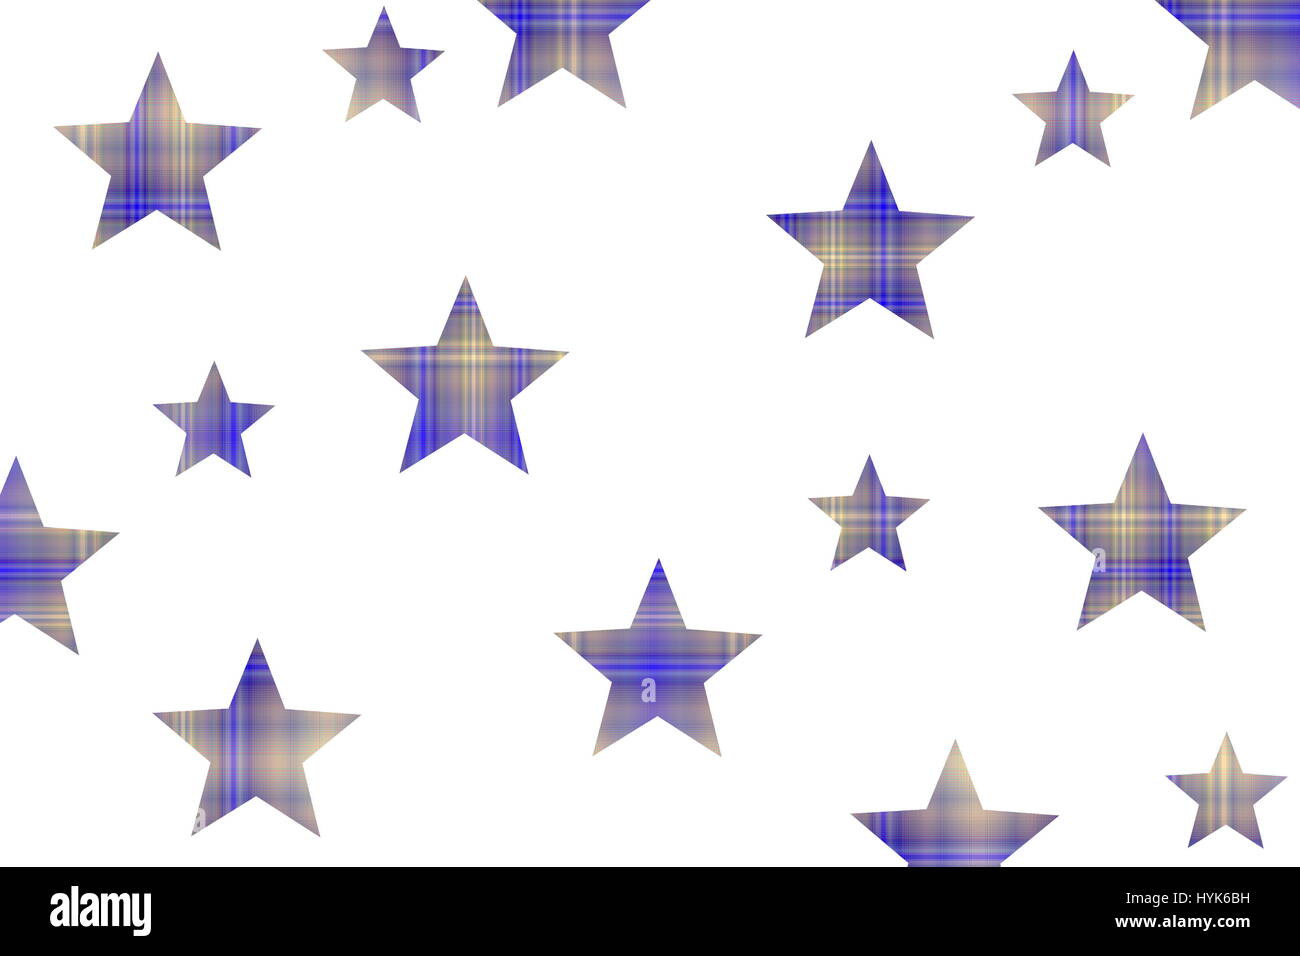 checkered stars on a white background Stock Photo